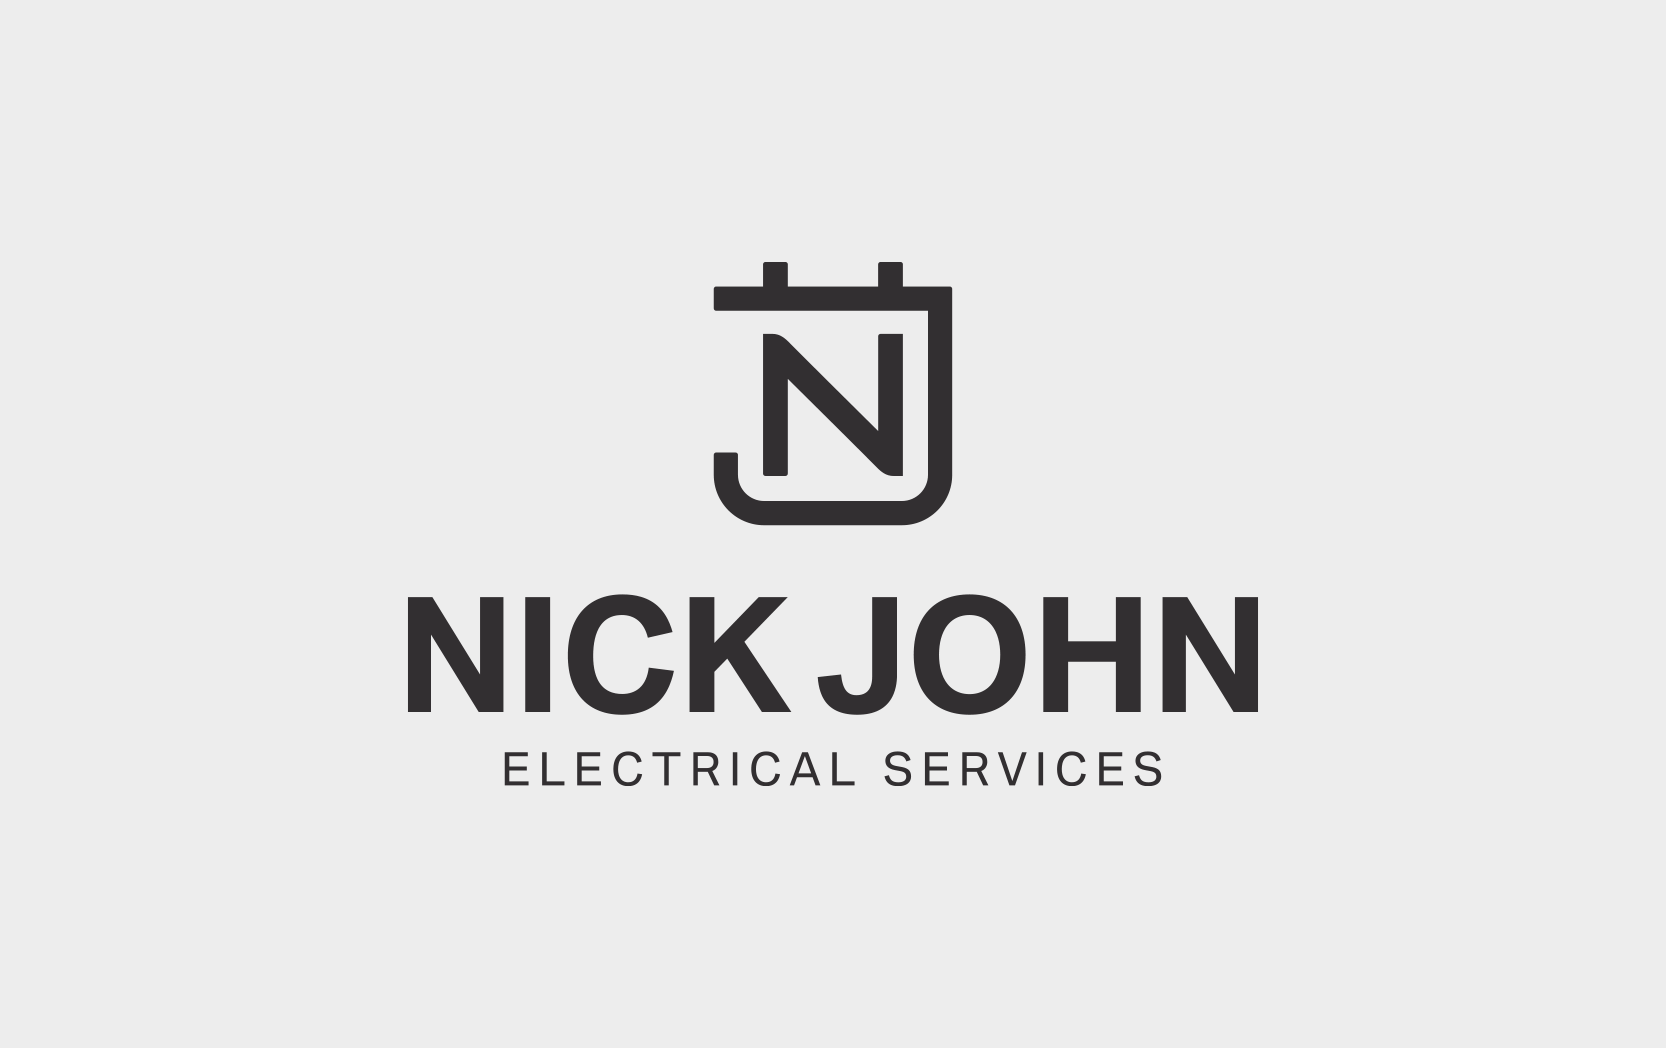 Nick John Electrical